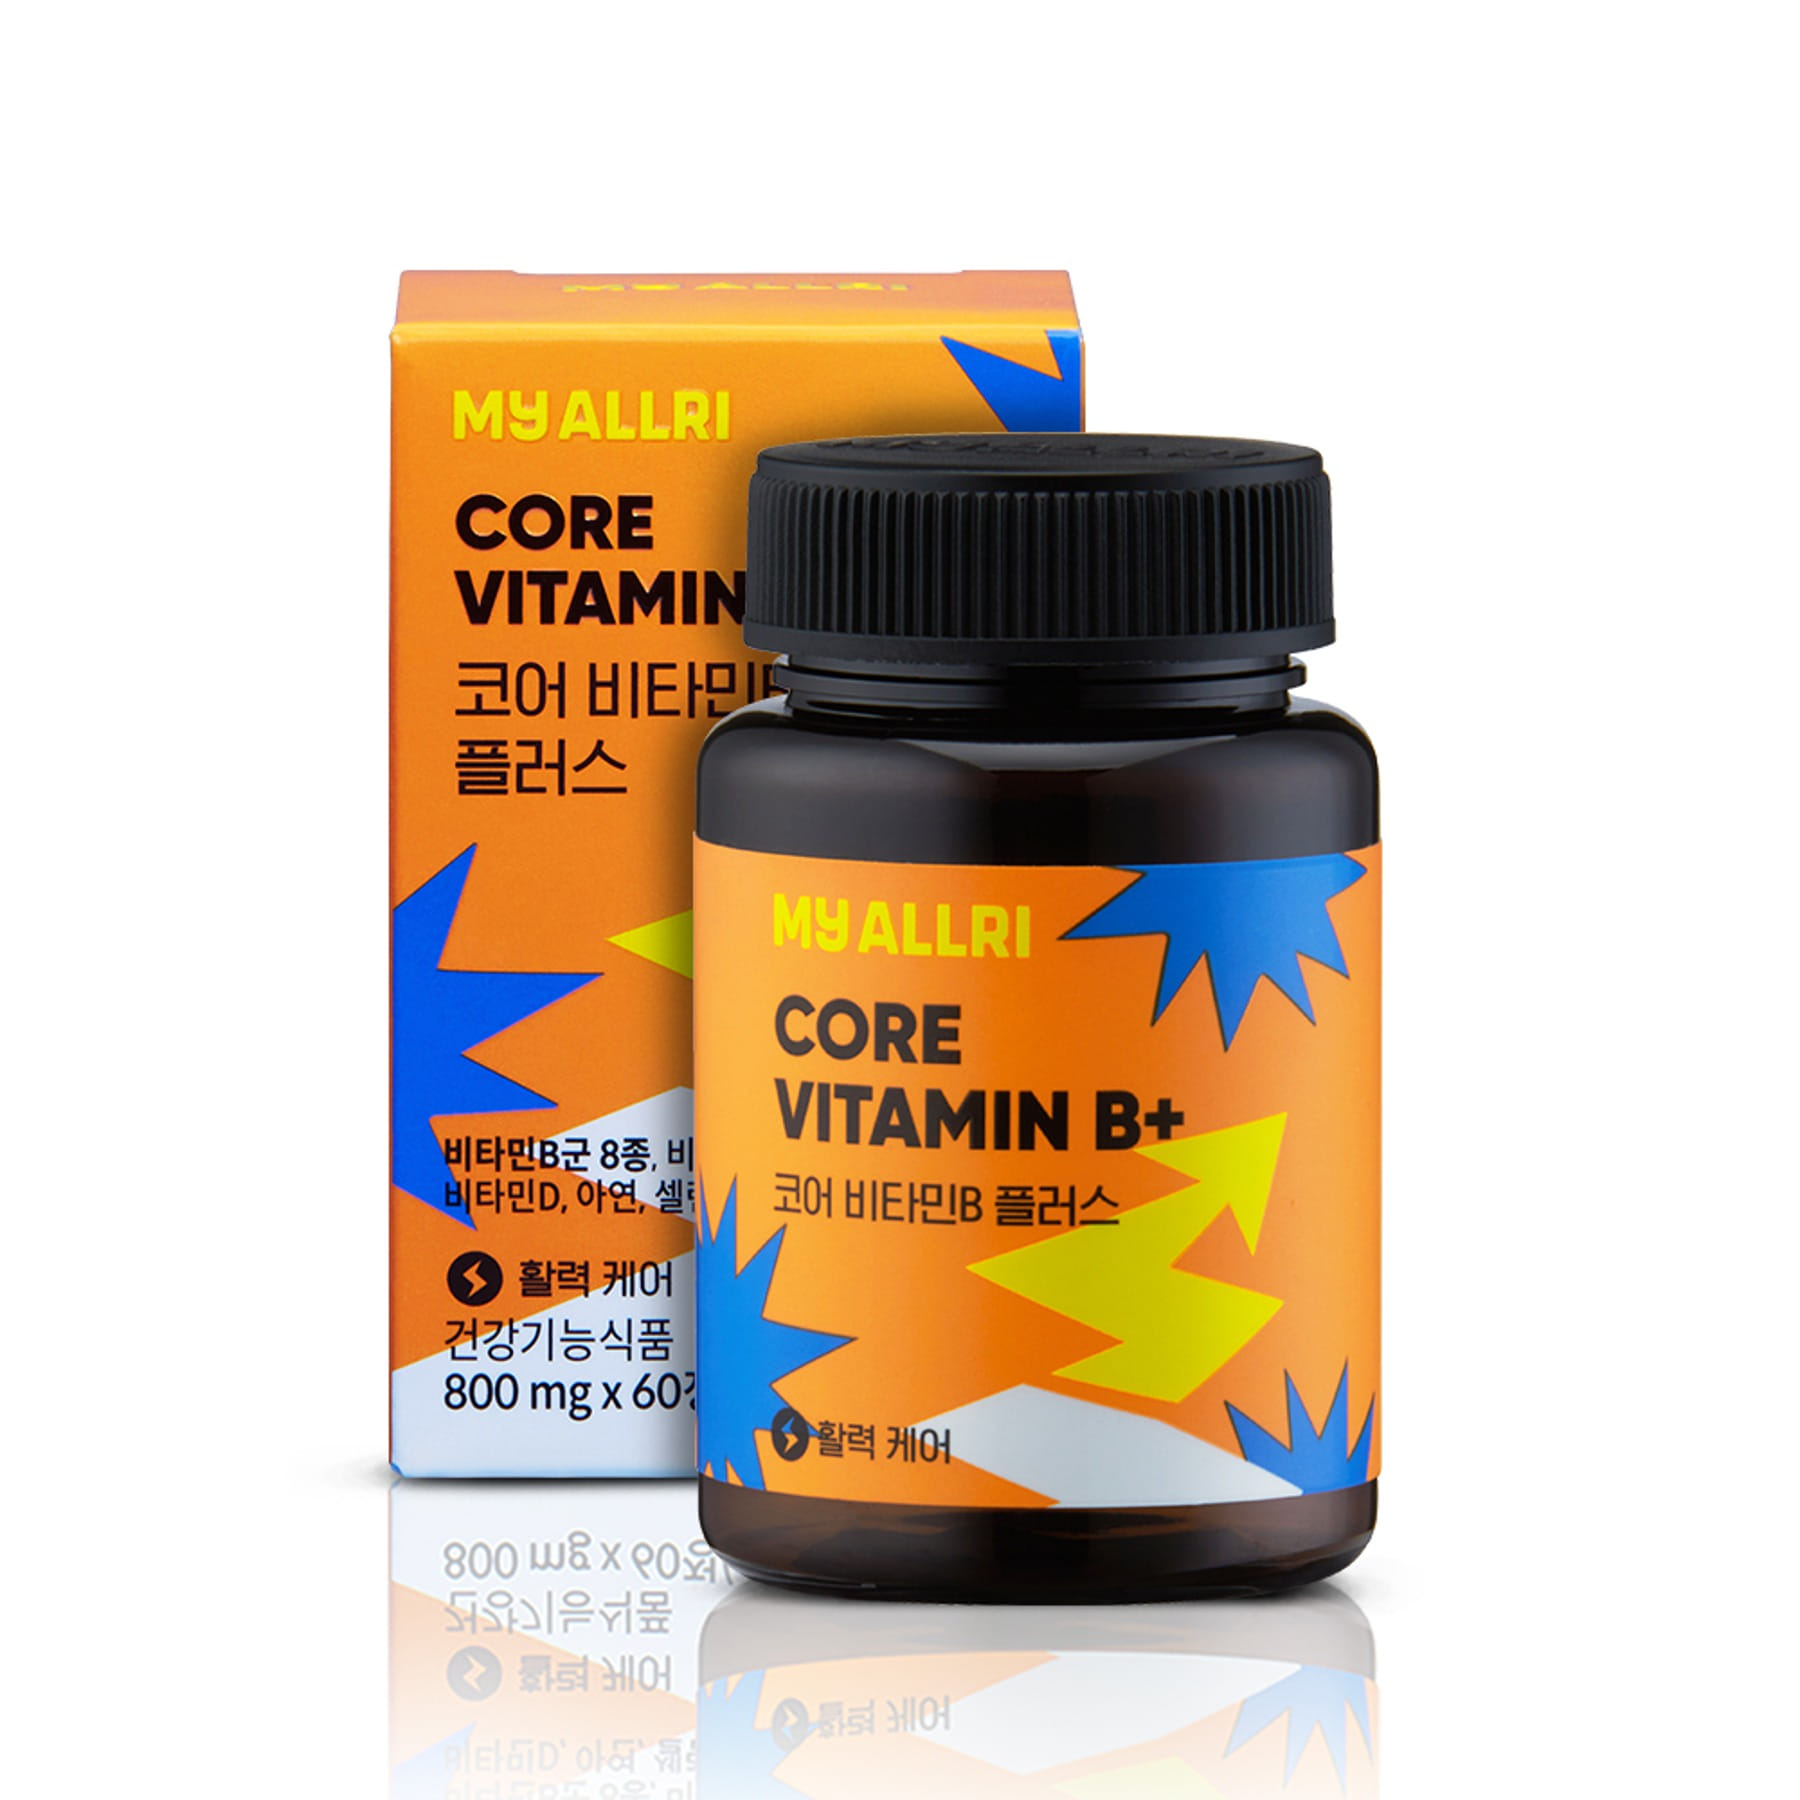 1 Core Vitamin B Plus (2 months&#039; supply)